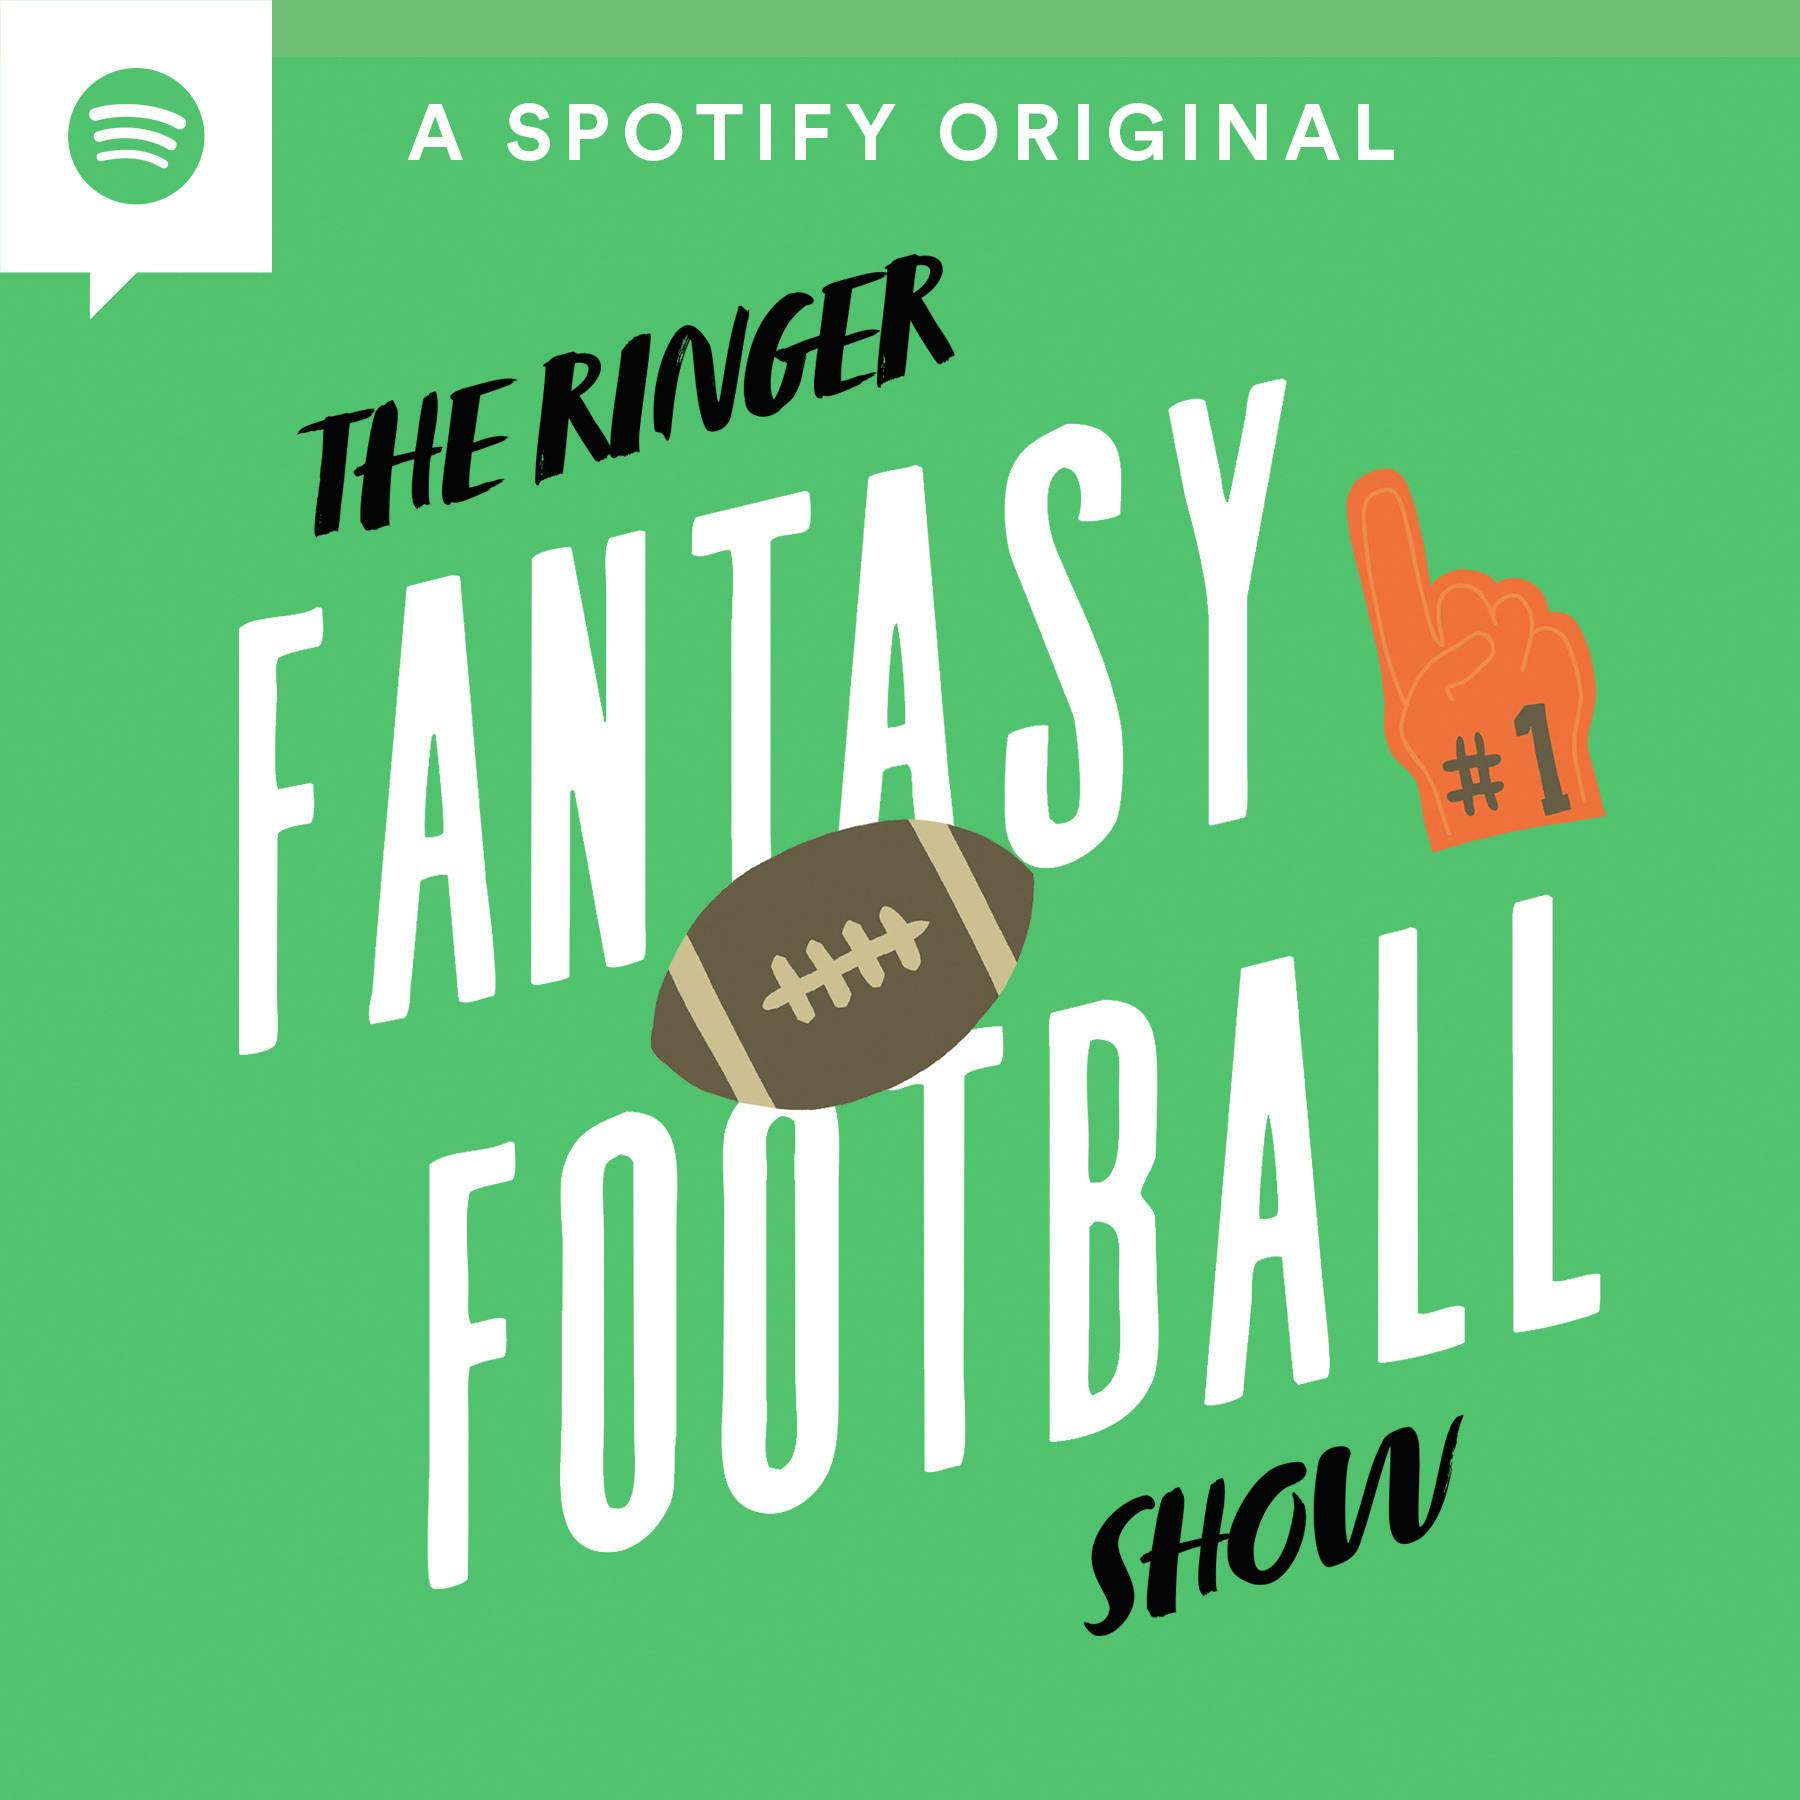 The Ringer Fantasy Football Show